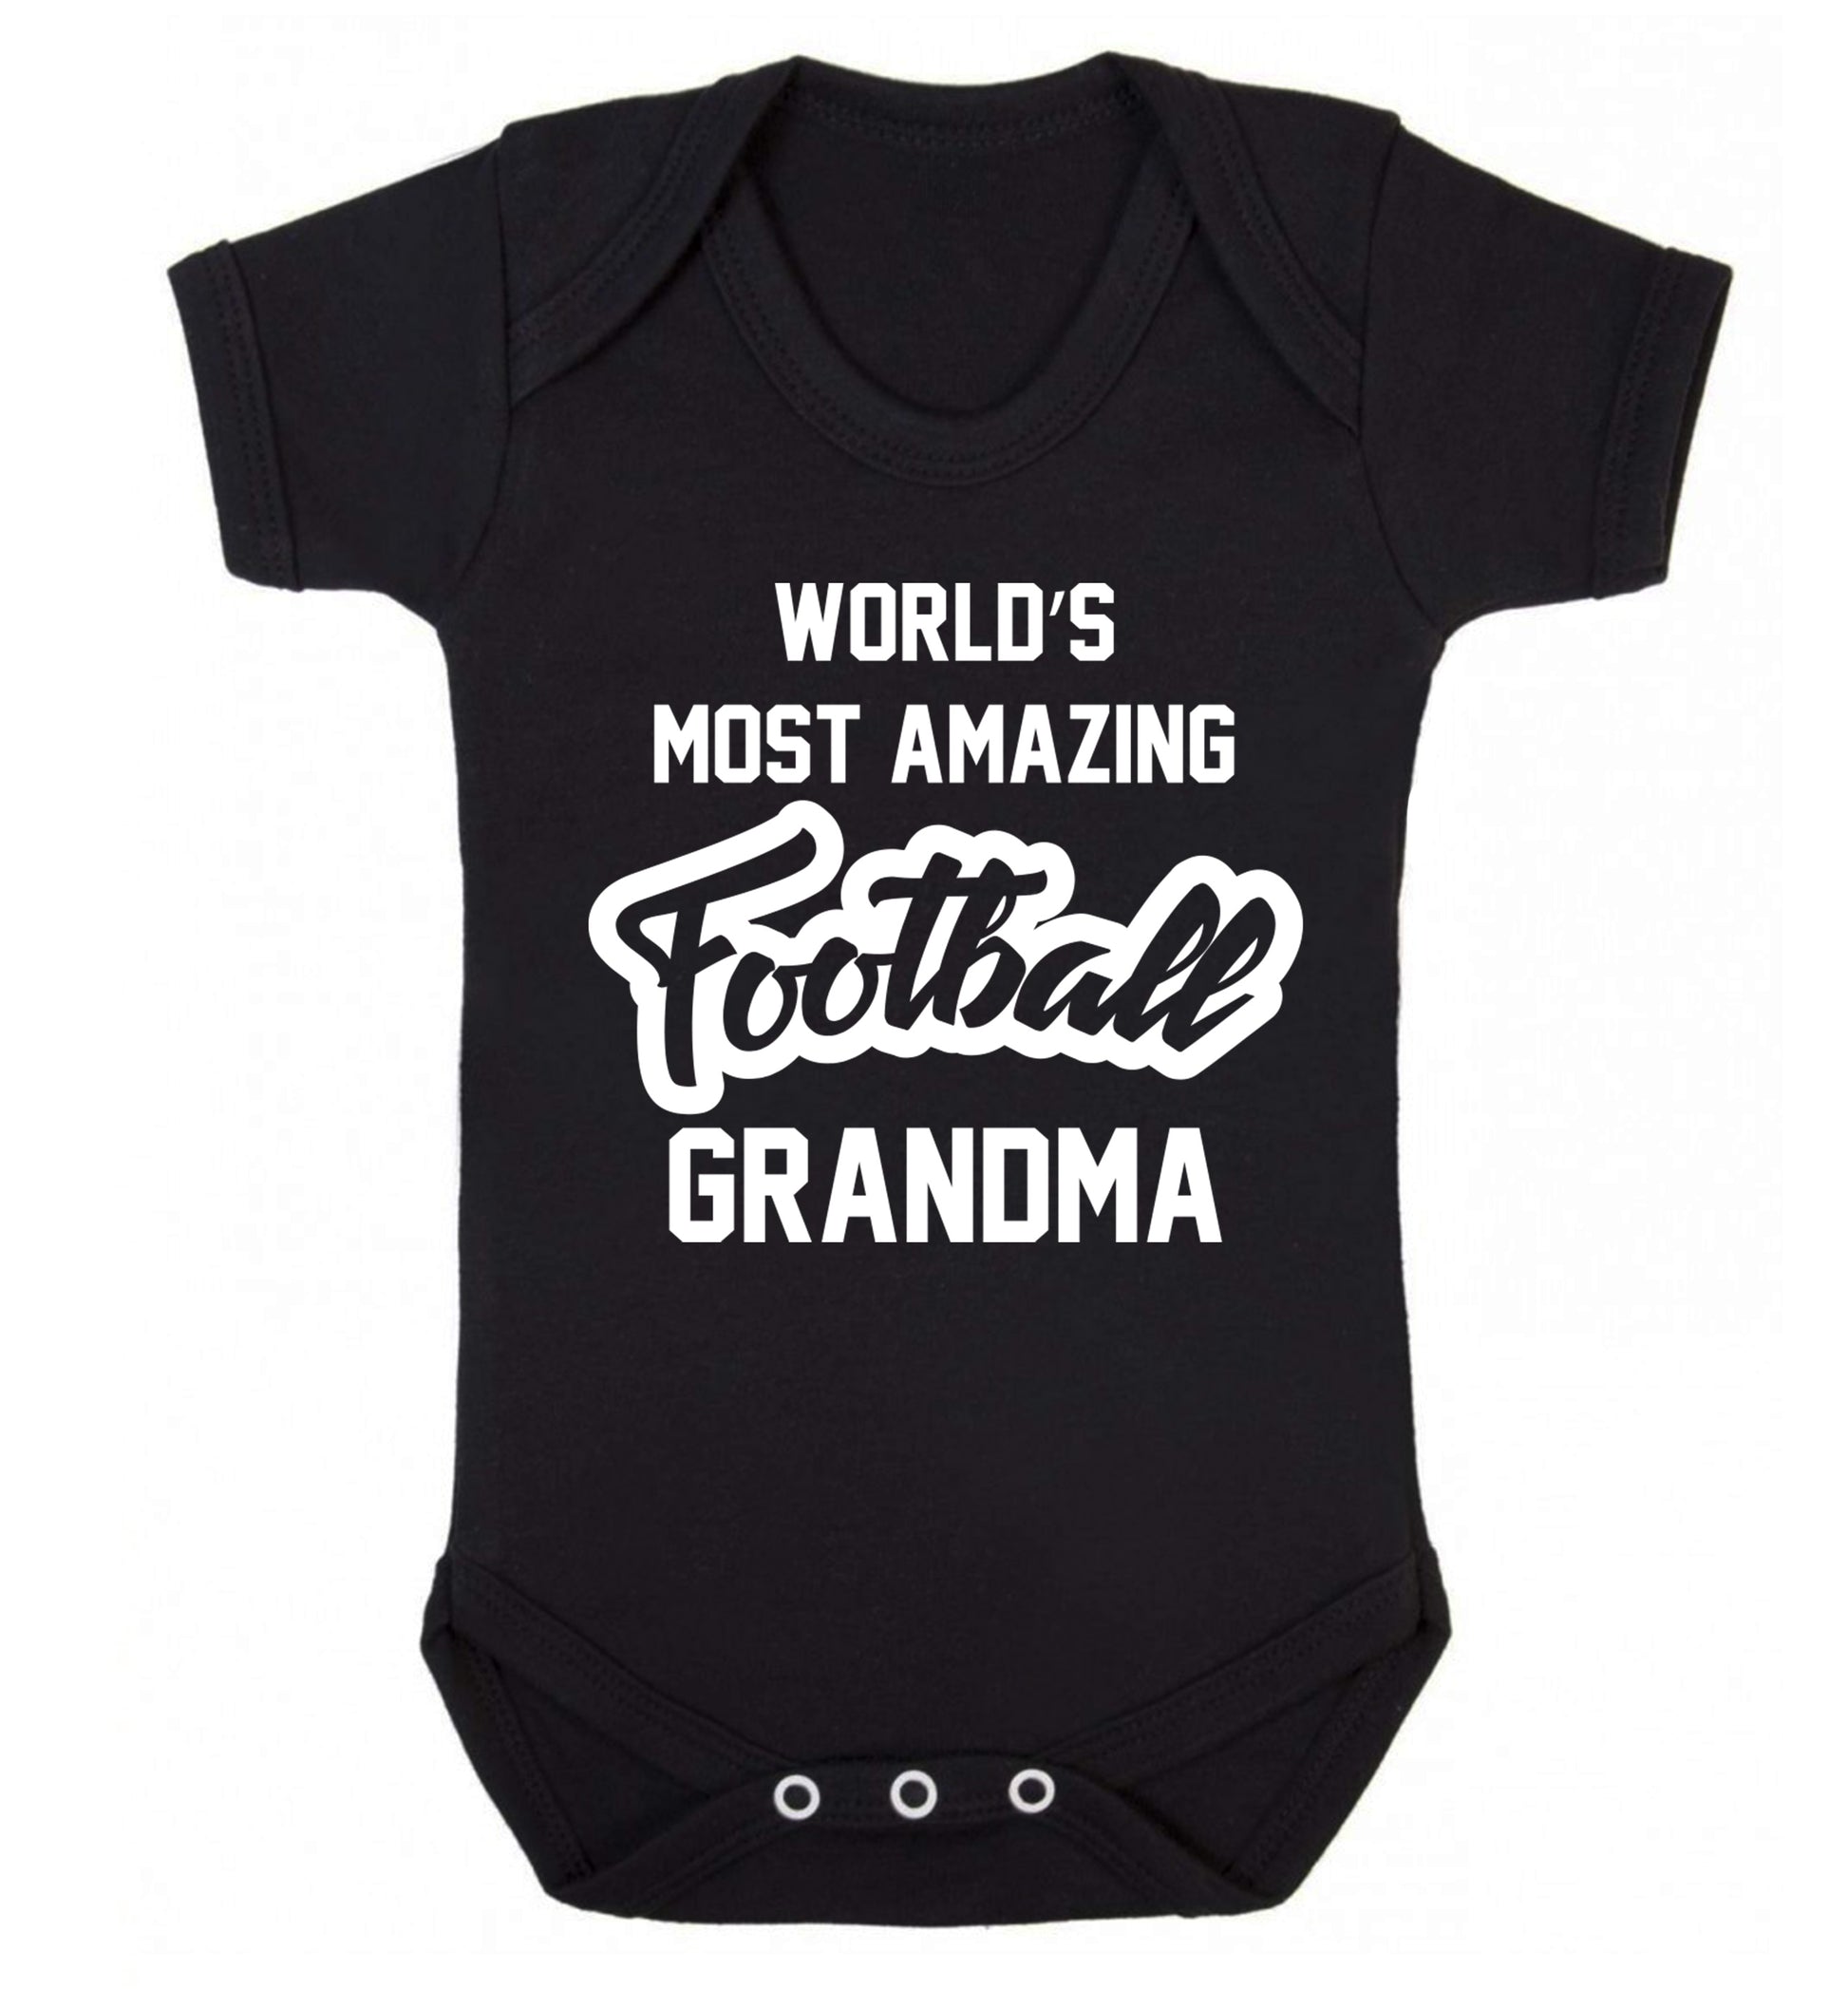 Worlds most amazing football grandma Baby Vest black 18-24 months